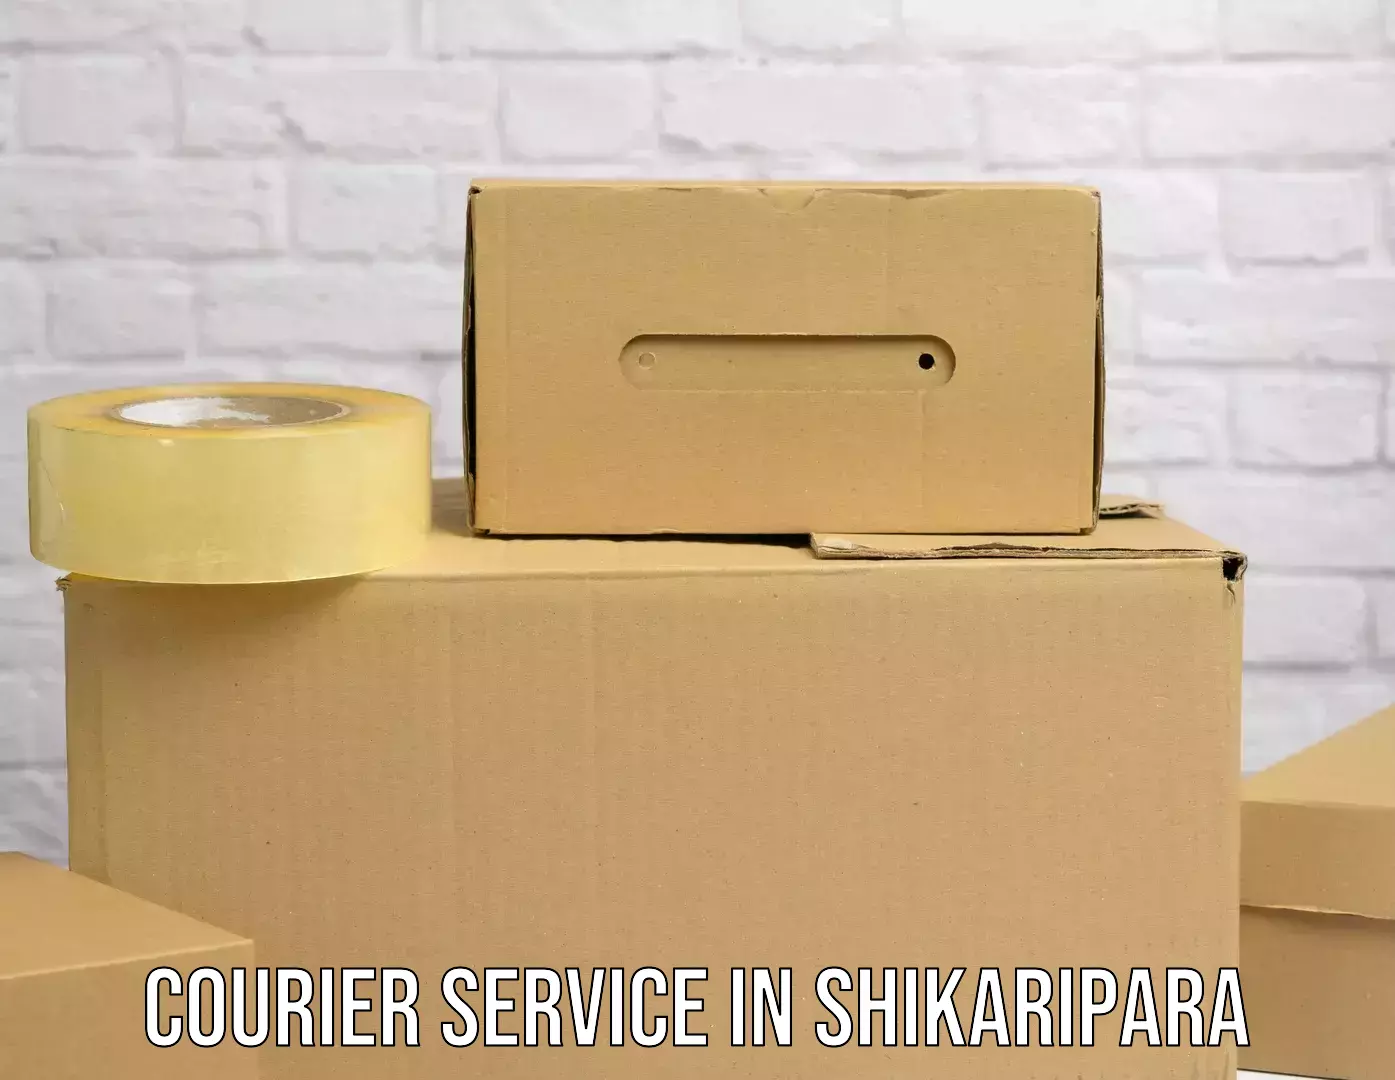 Efficient order fulfillment in Shikaripara